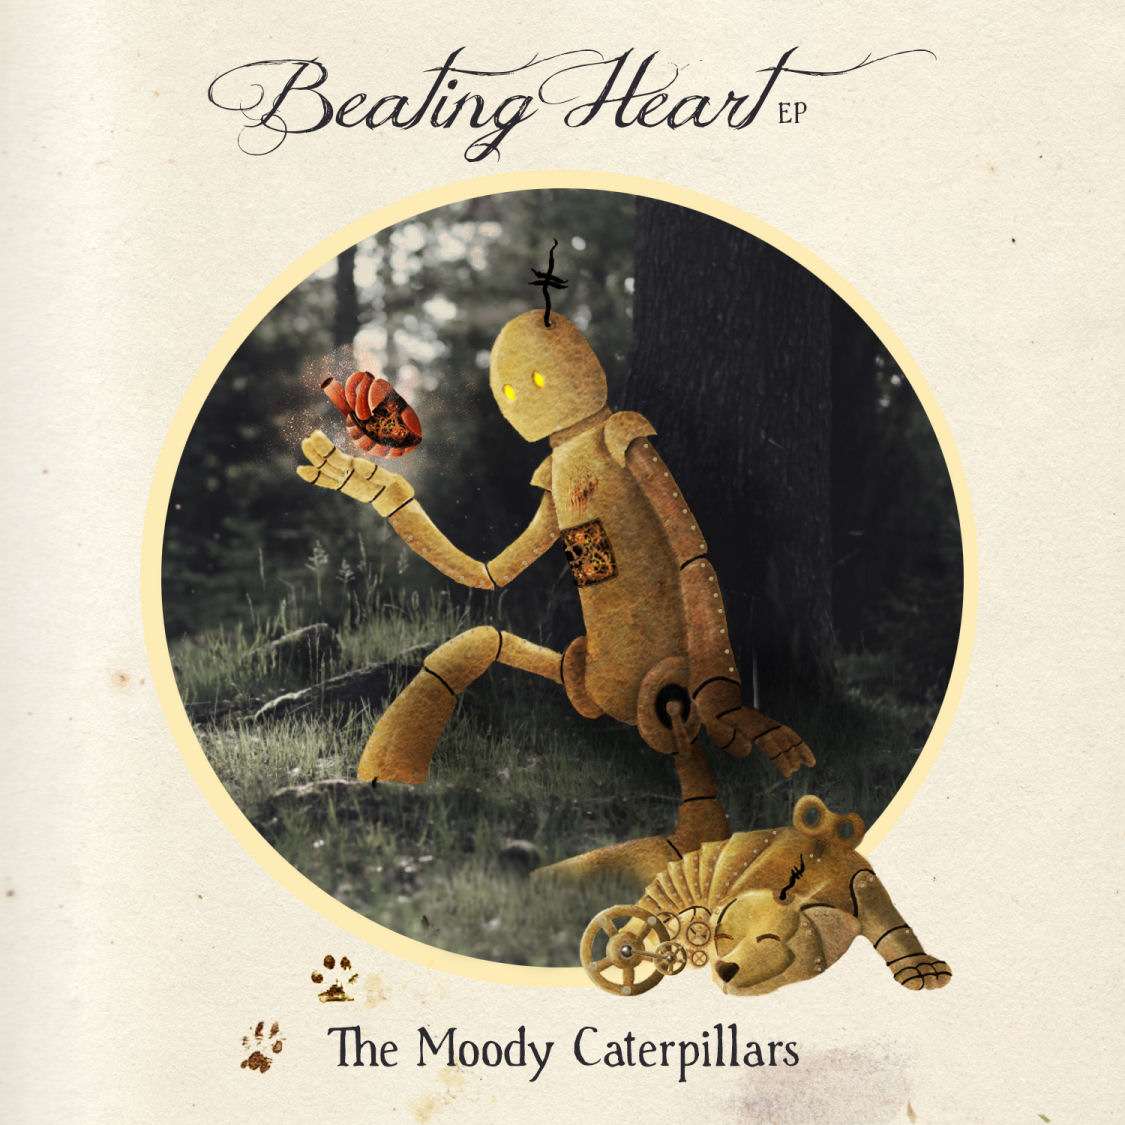  The Moody Caterpillars – Beating Heart